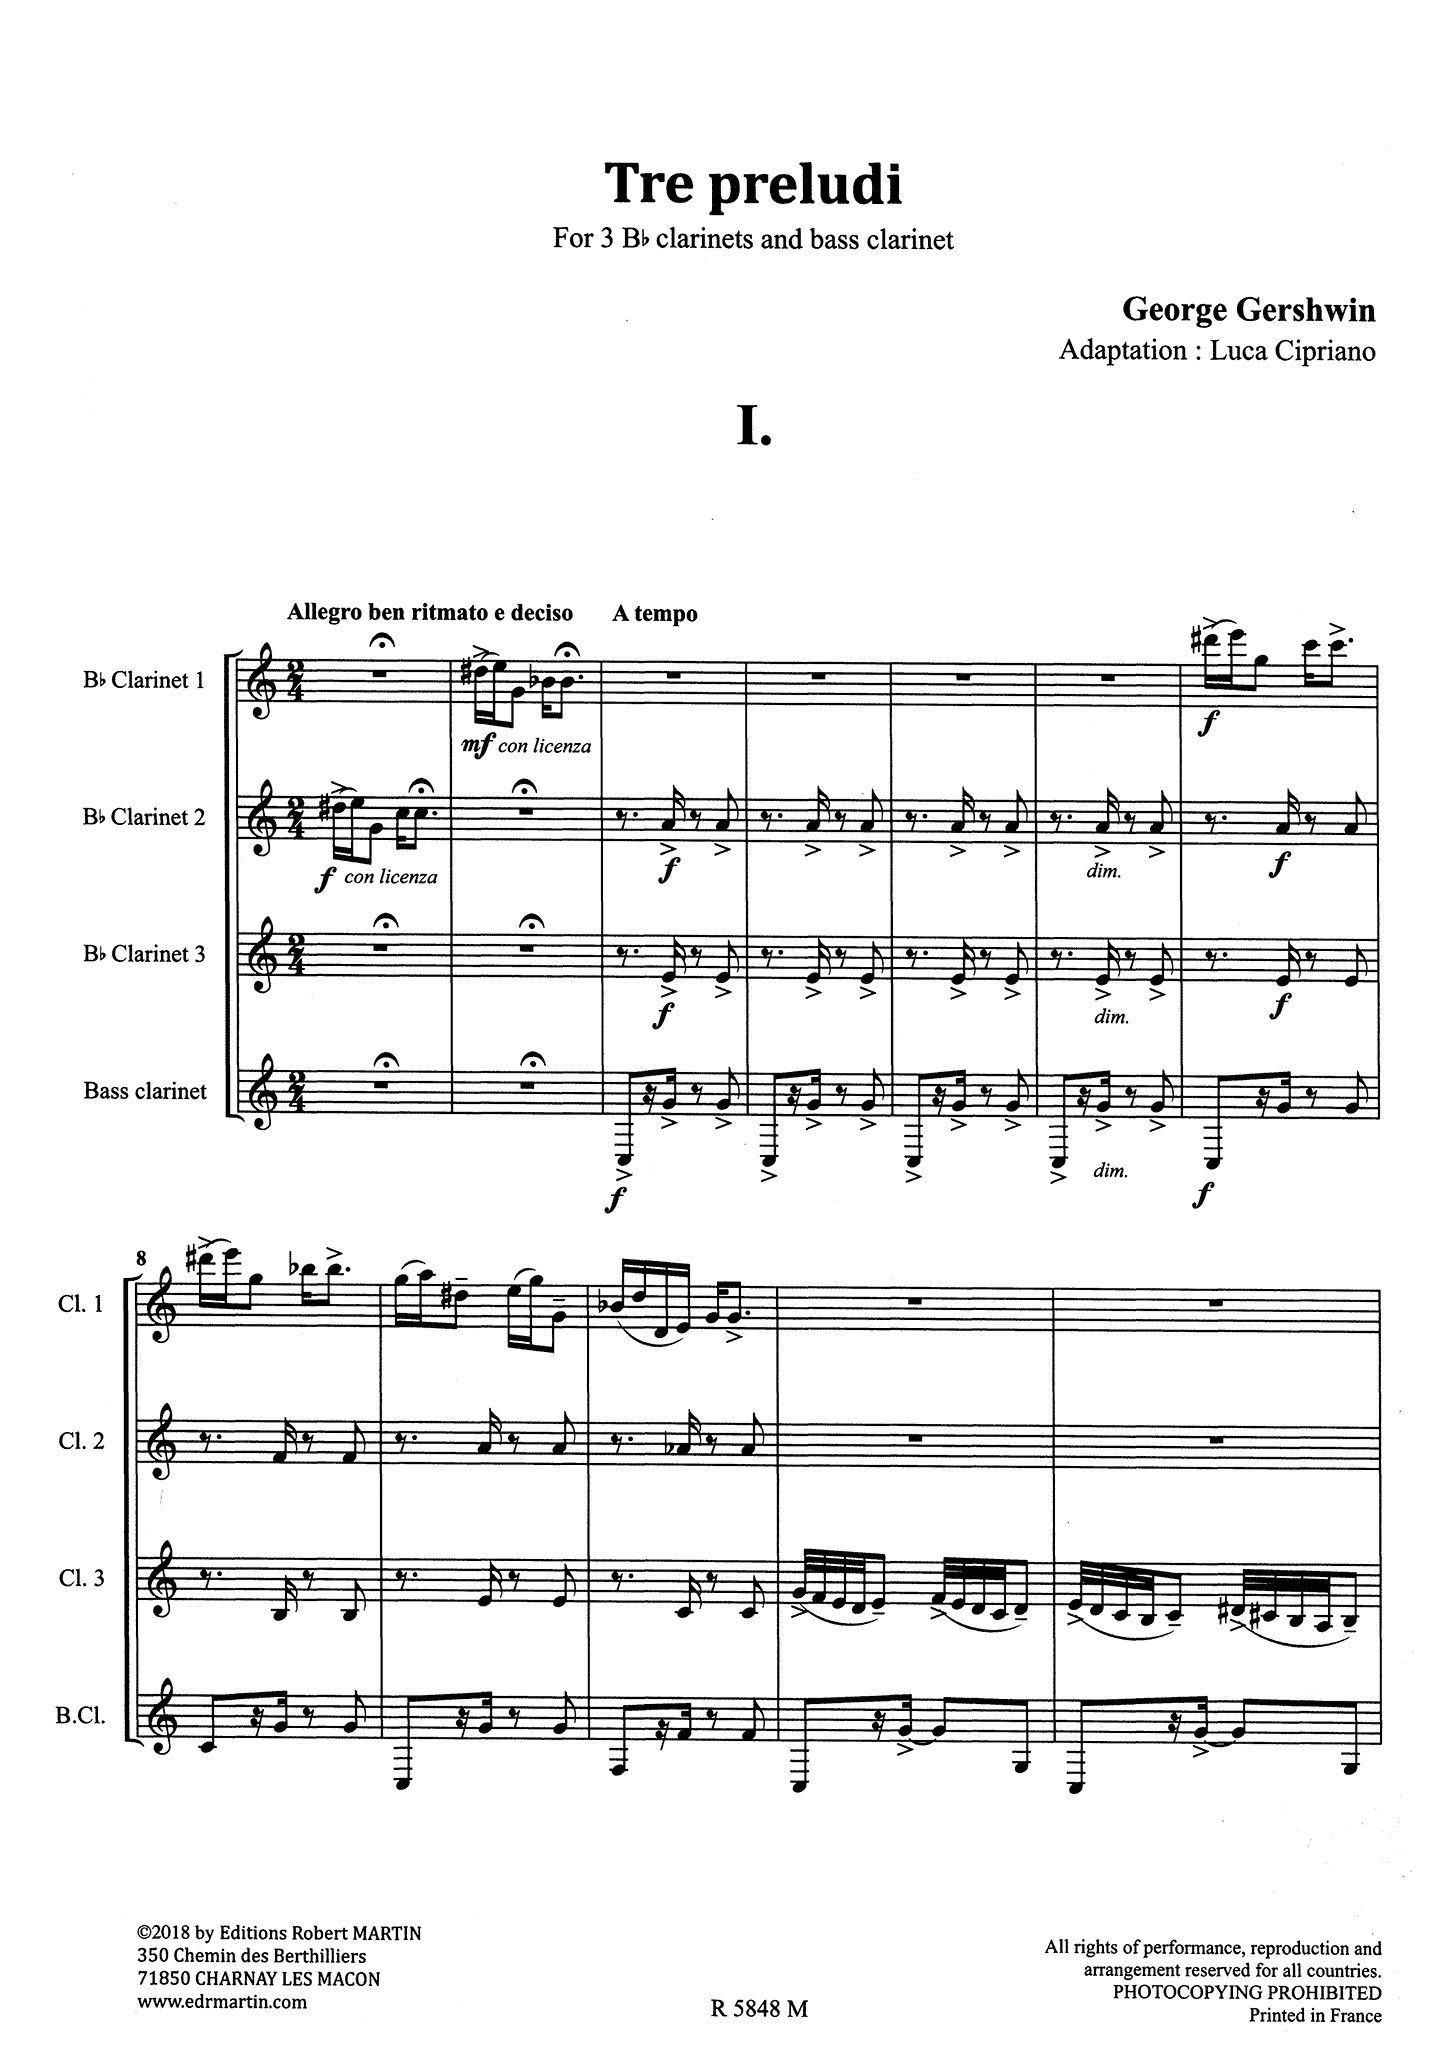 Gershwin 3 Preludes, for clarinet quartet - Movement 1